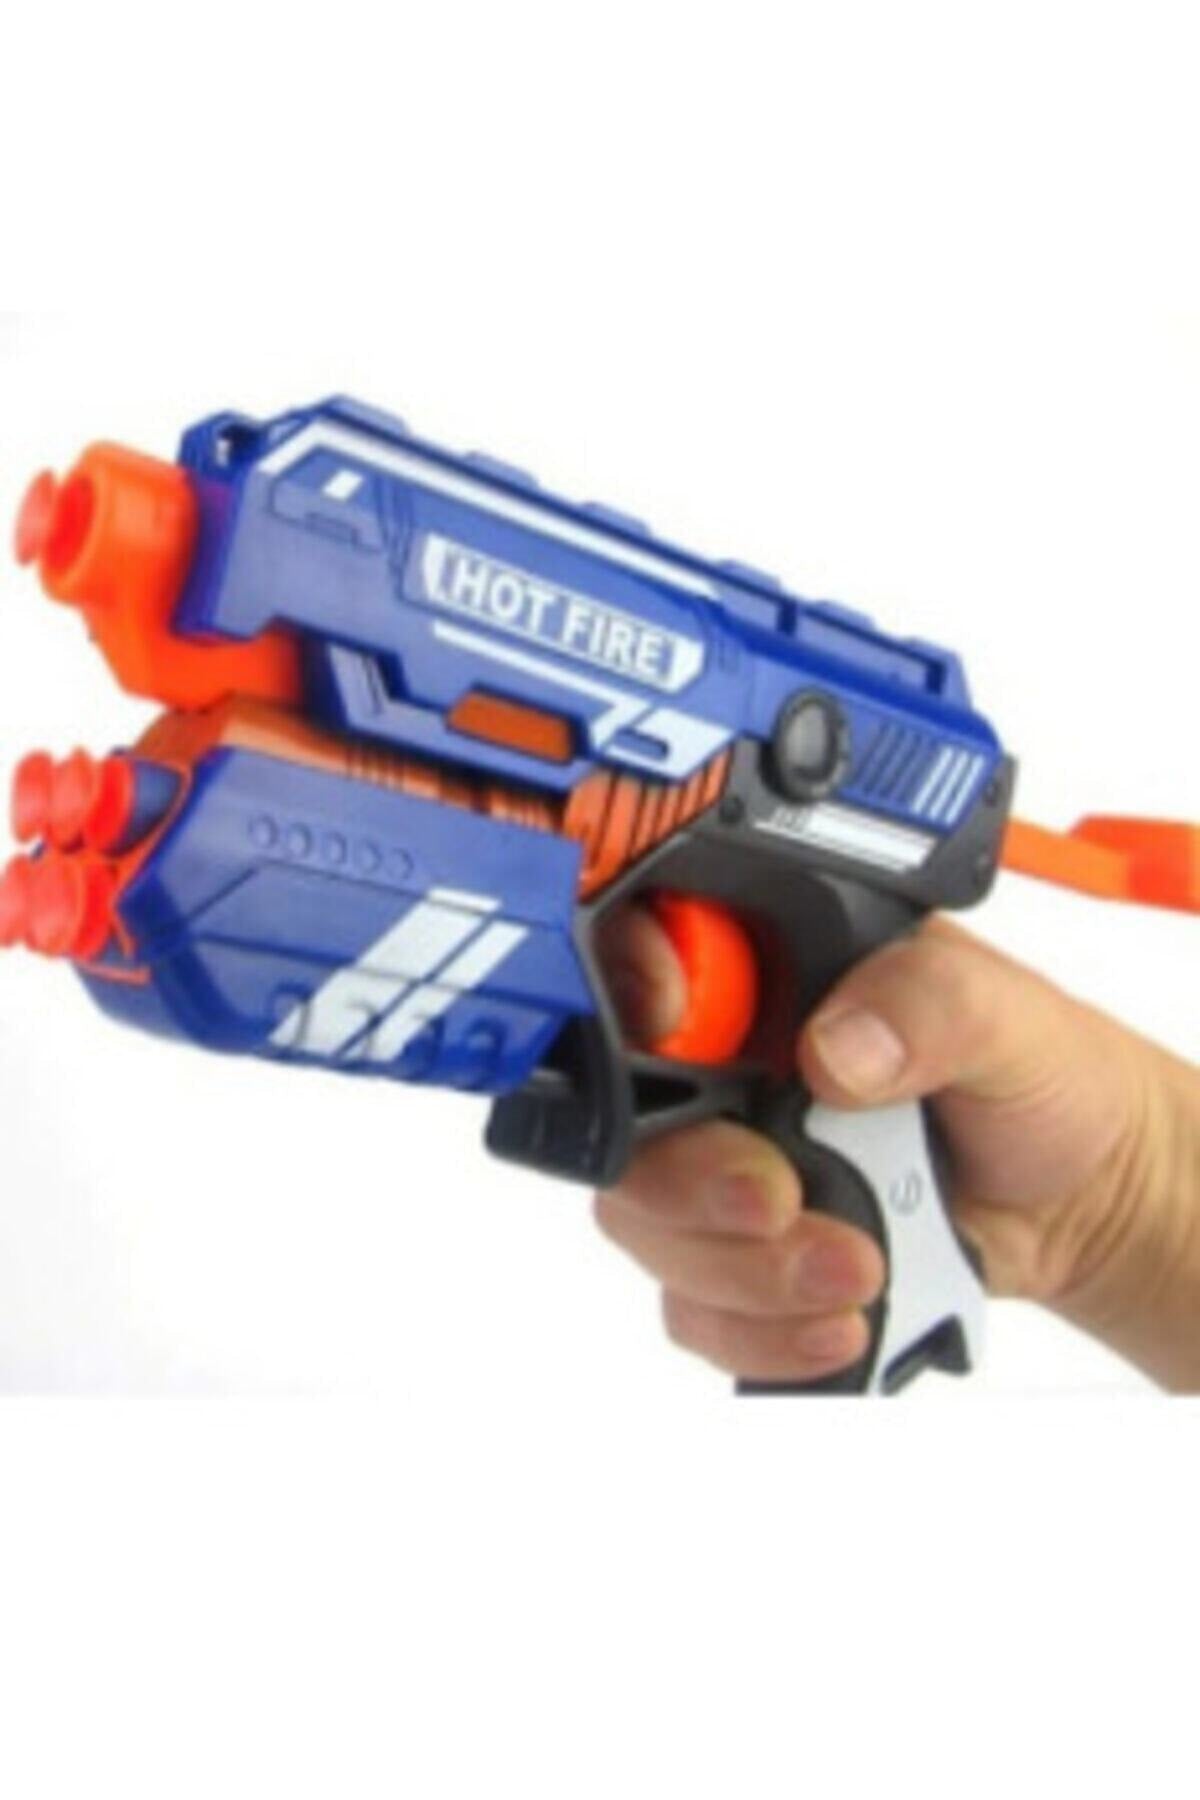 Hot Fire Shooter Toy Gun Shooting Sponge Bullets